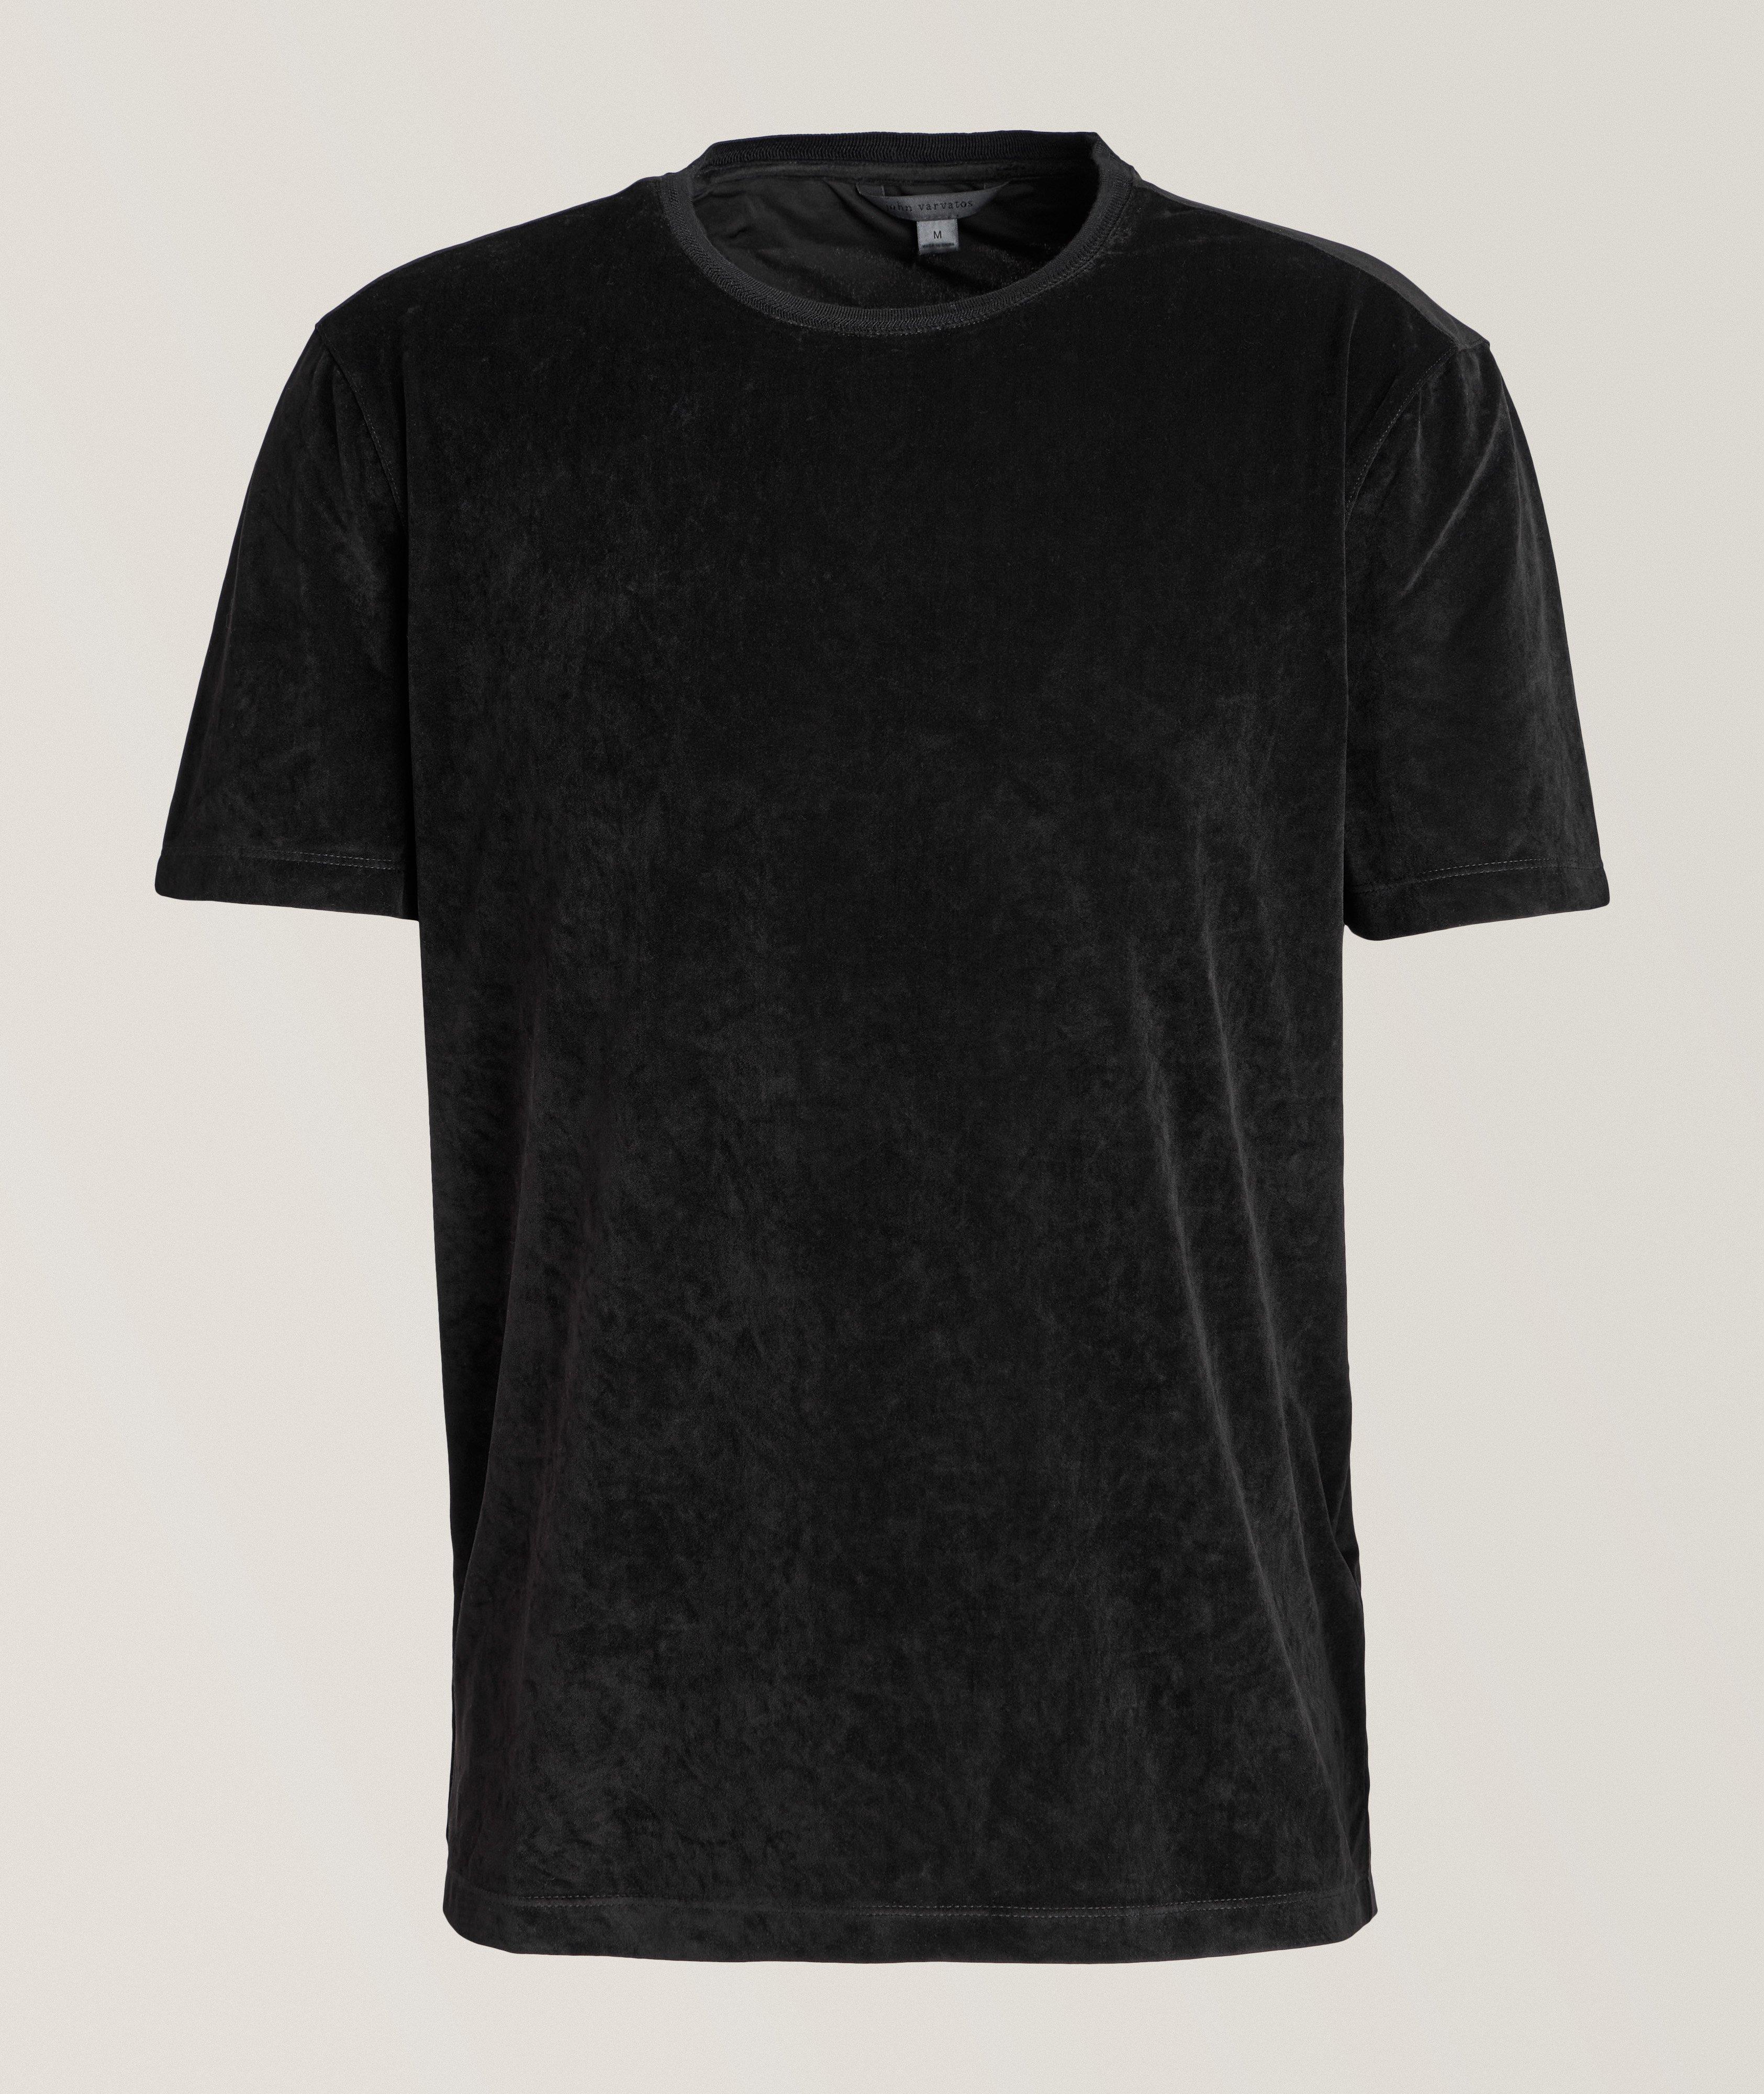 Barcelos Triacetate-Blend T-Shirt image 0